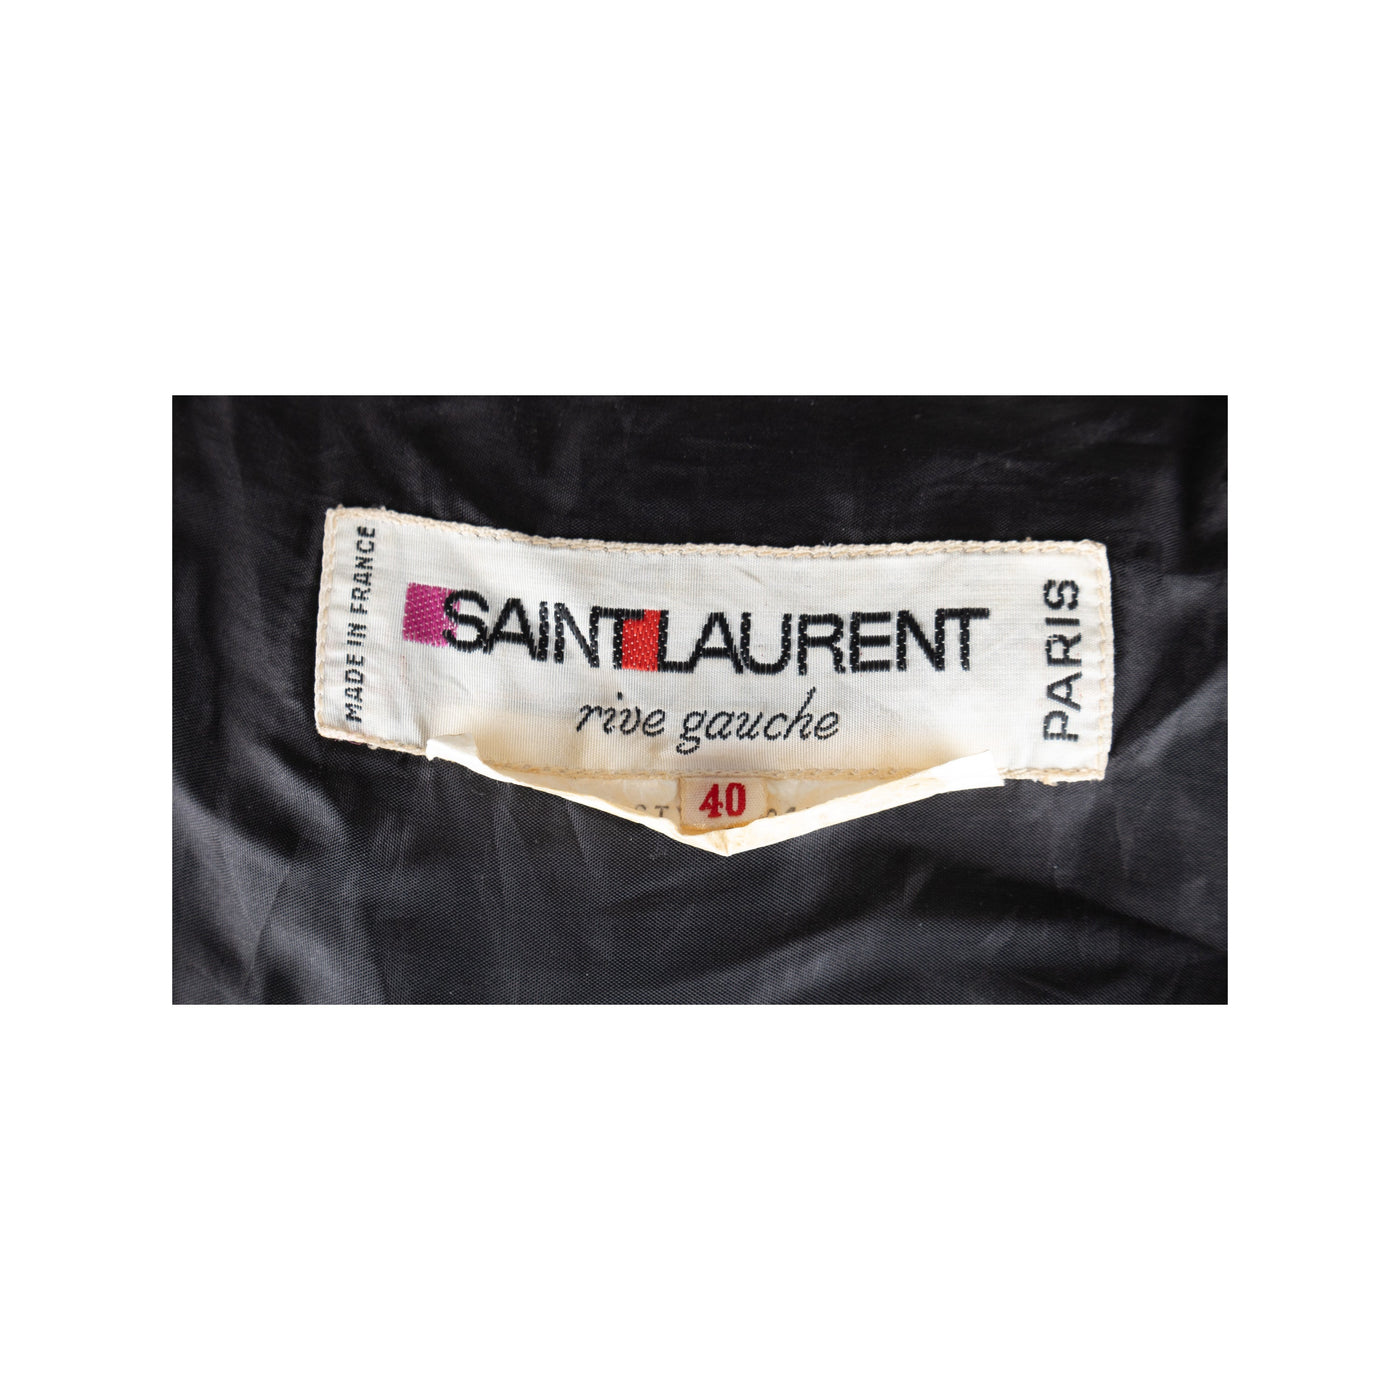 Secondhand Yves Saint Laurent Vintage Hooded Cape Coat 